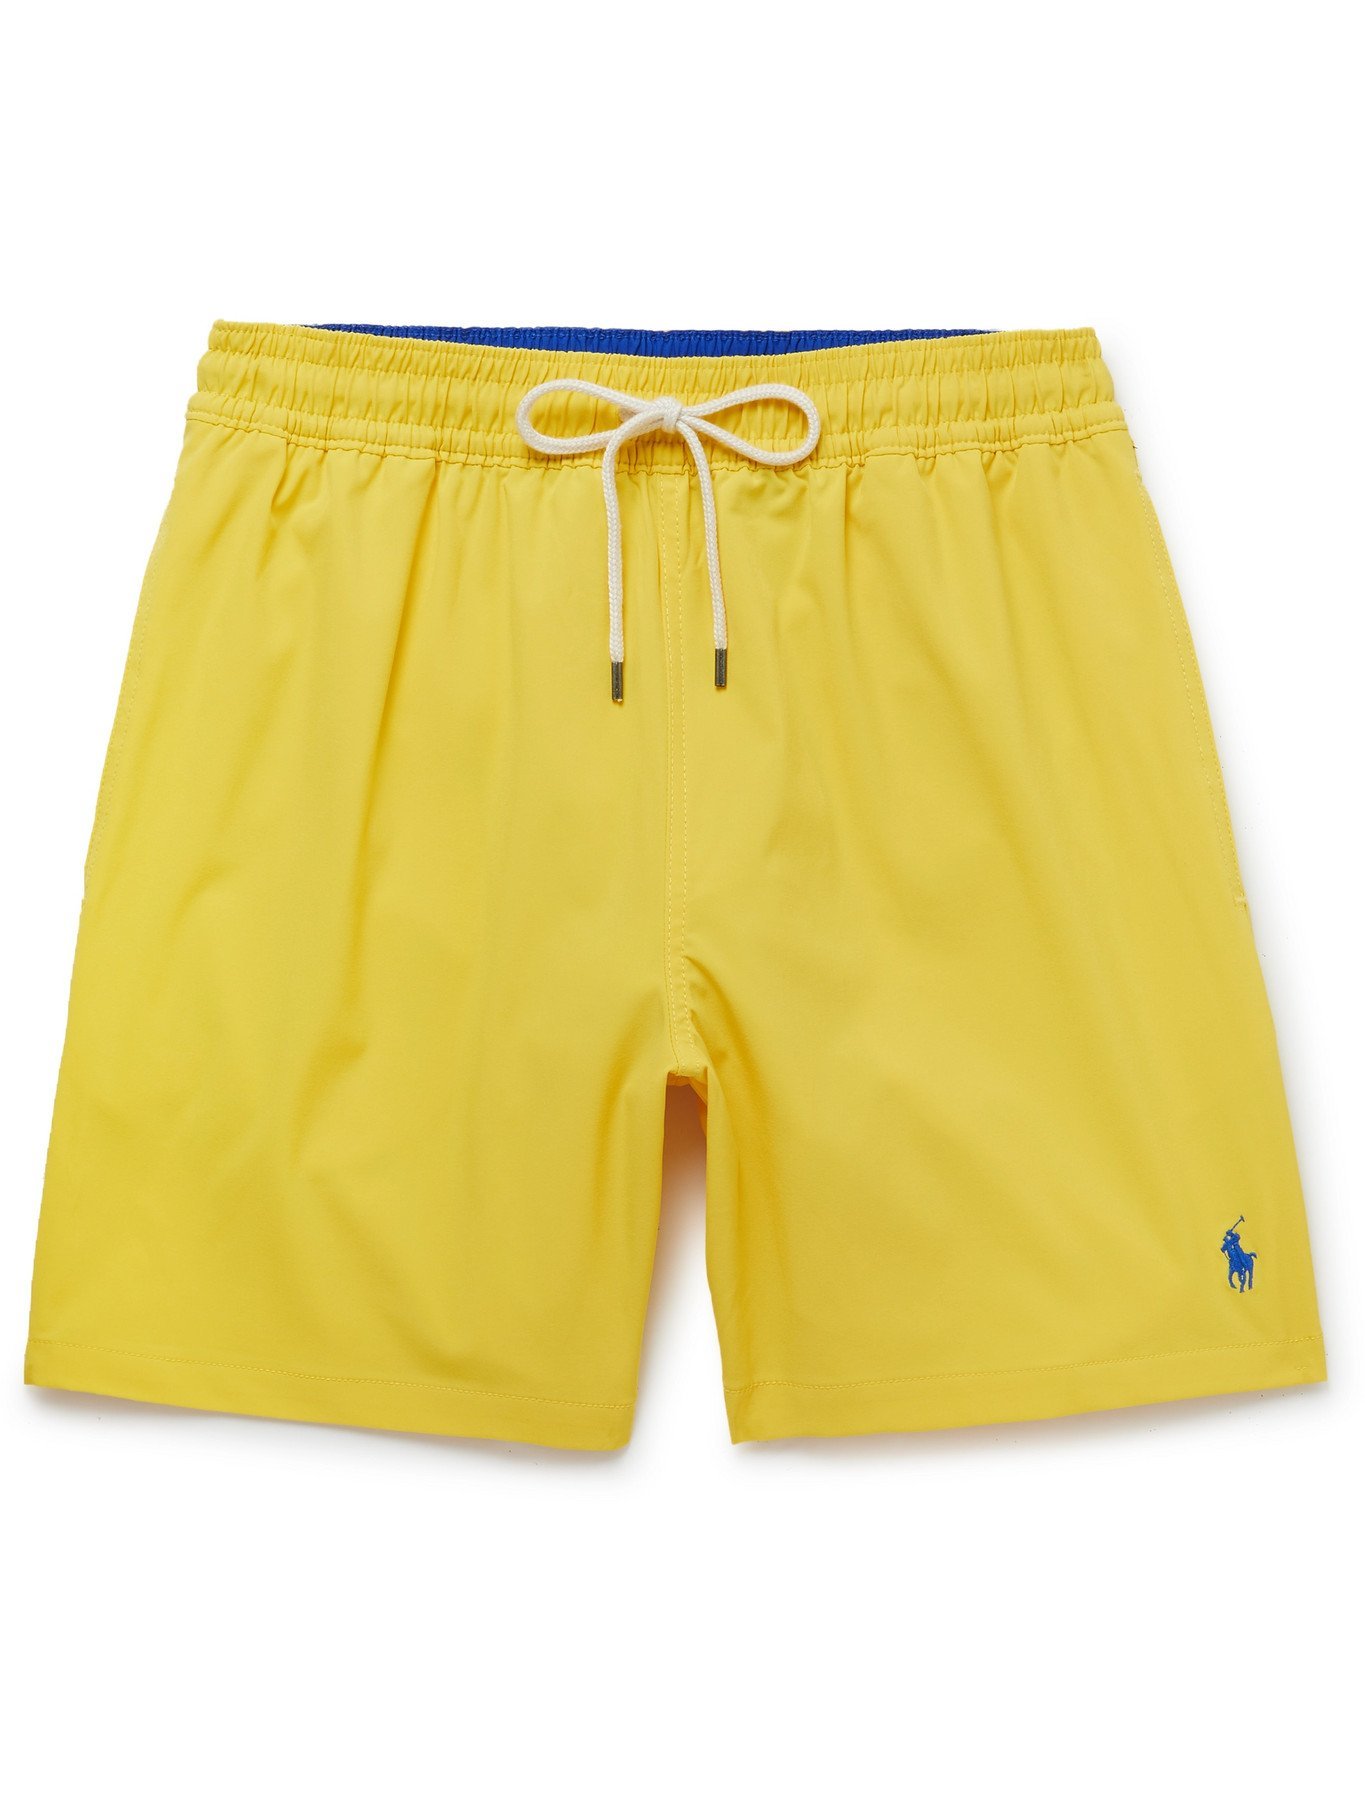 POLO RALPH LAUREN - Traveler Mid-Length Swim Shorts - Yellow - S Polo Ralph  Lauren